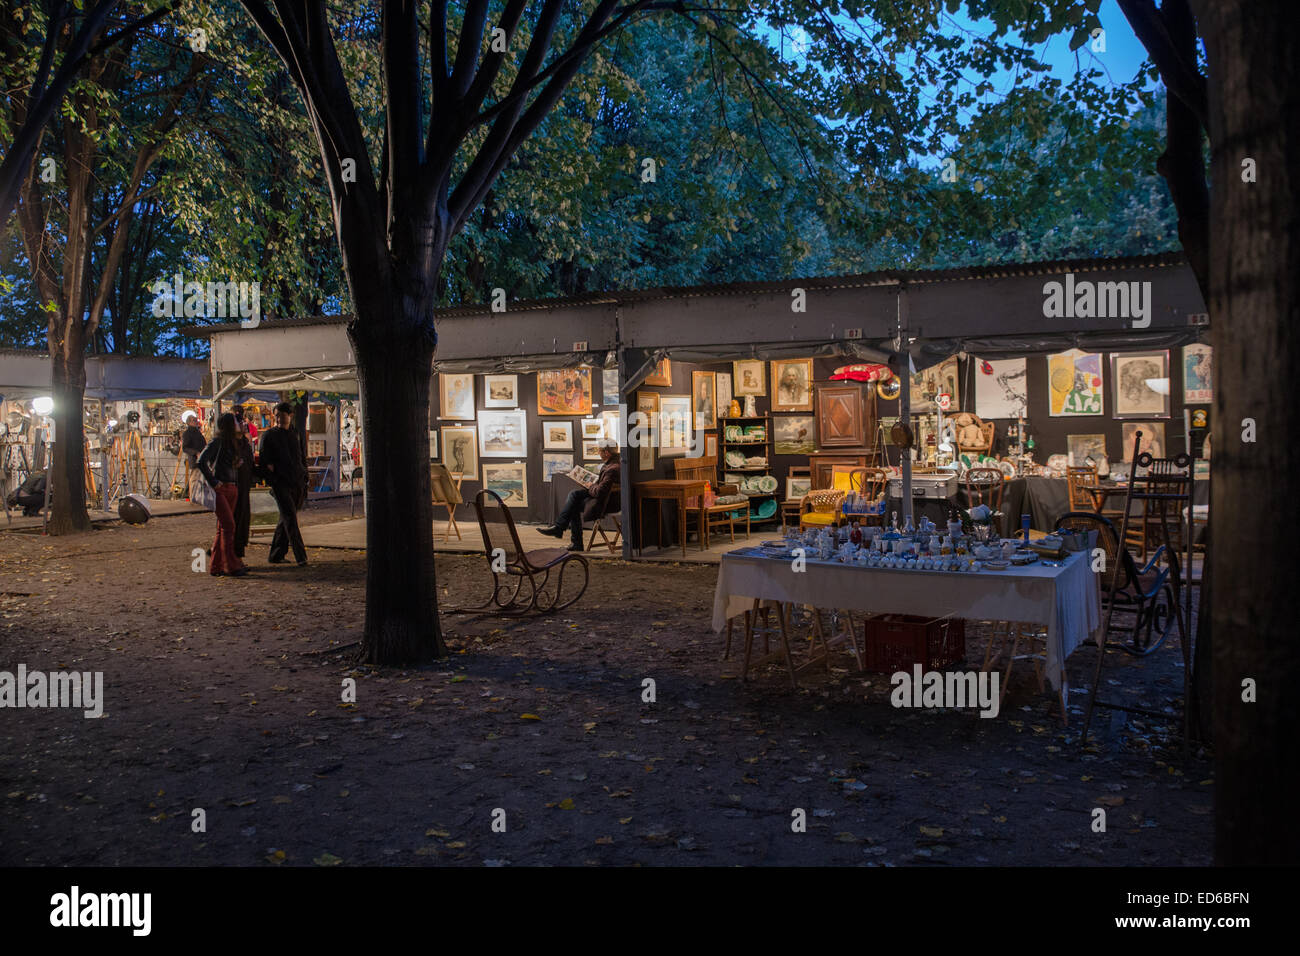 Paris outdoor art open market Stock Photo